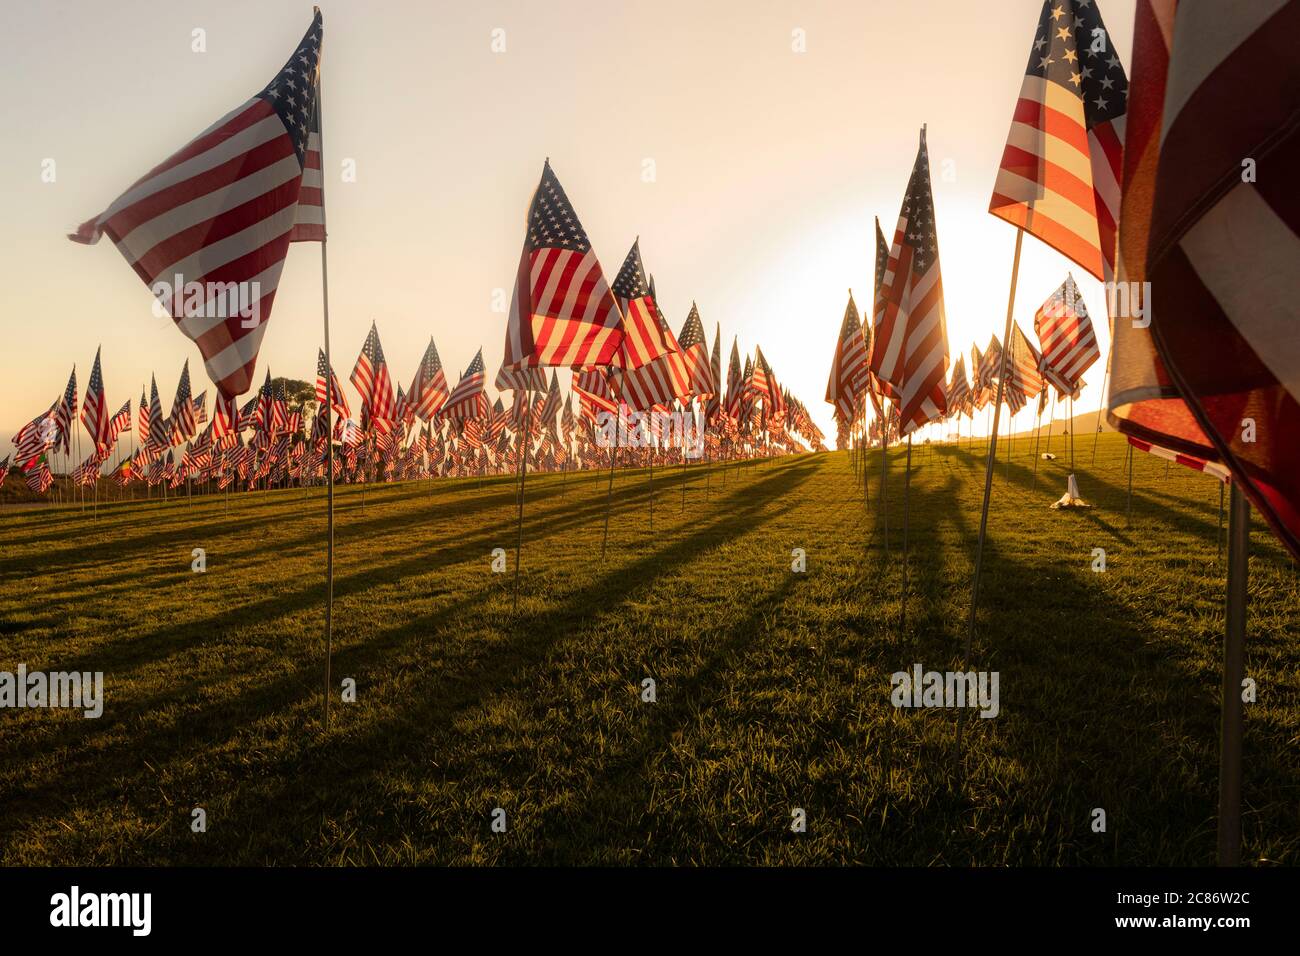 Alumni Park Malibu - Flags to remember 9/11 terror attacks Stock Photo